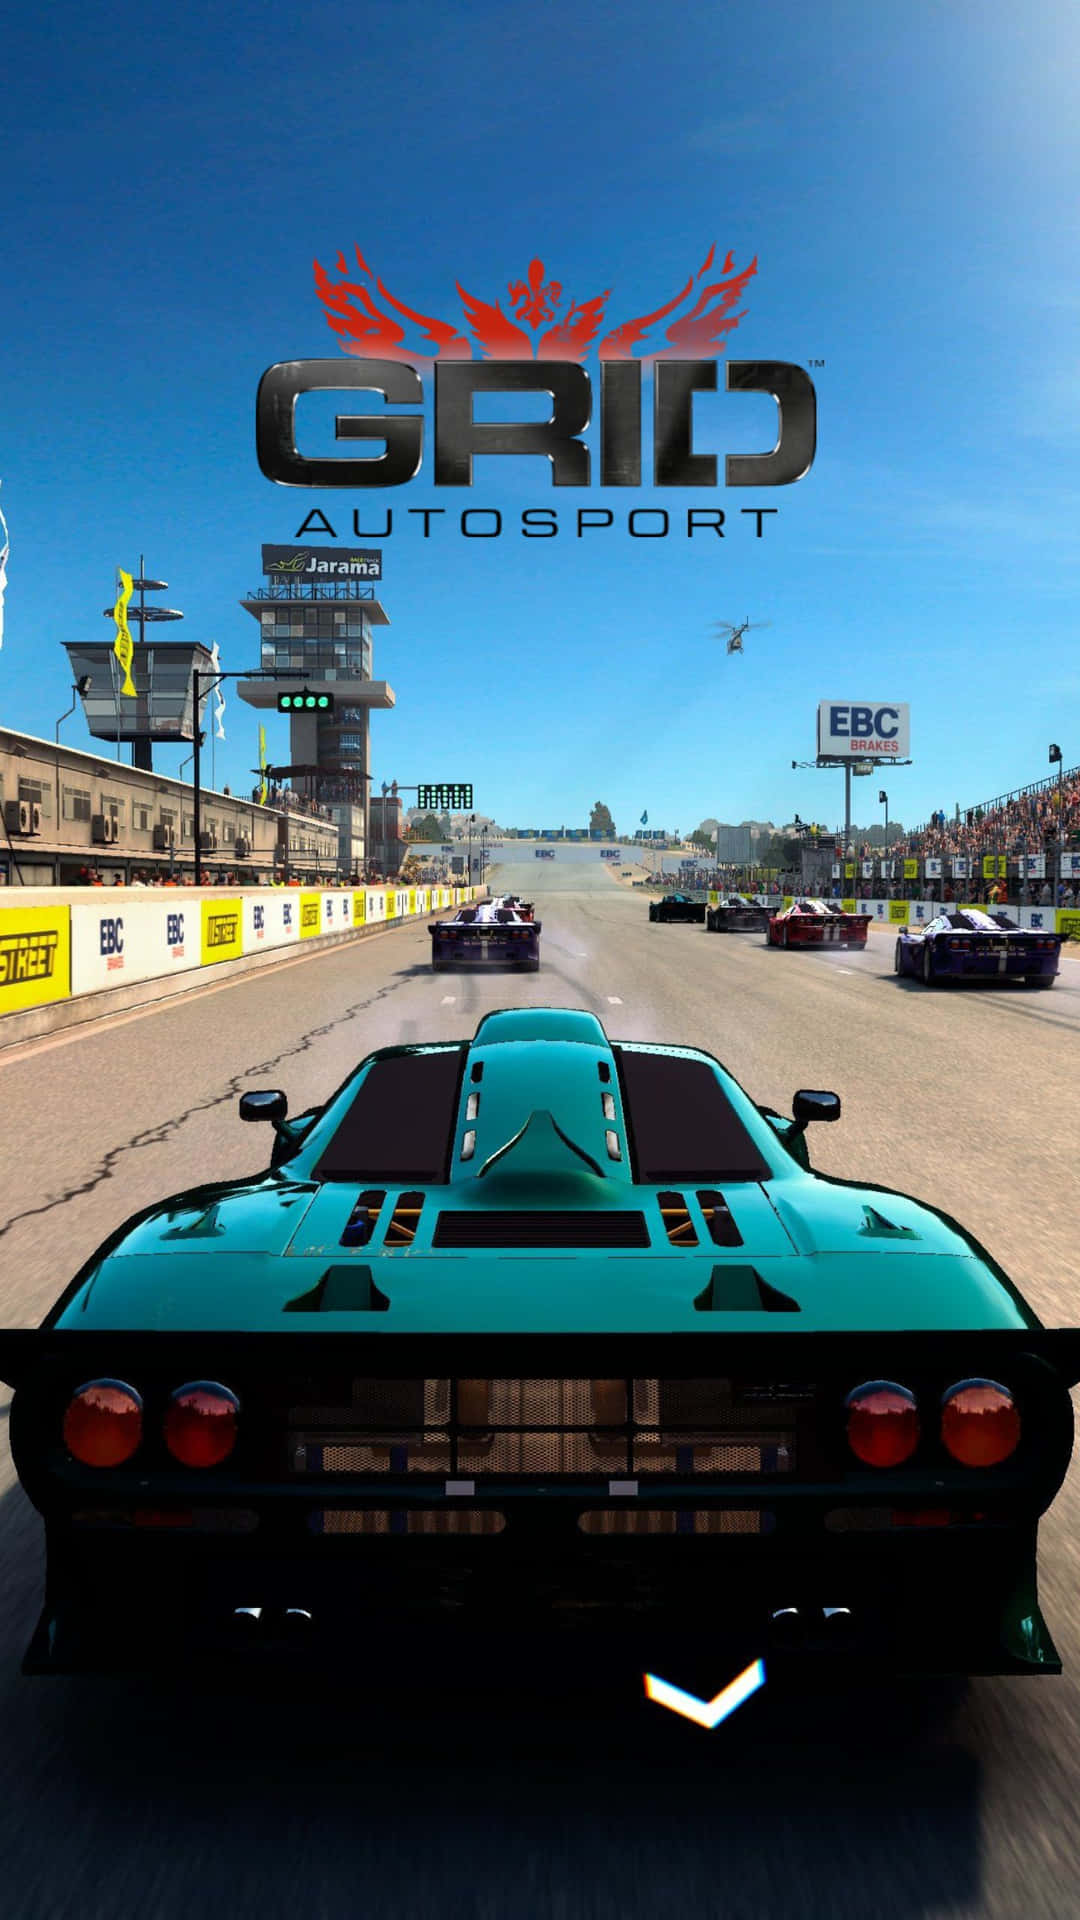 Upplevrealistisk Racing-spelupplevelse Med Android Grid Autosport Som Bakgrundsbild.